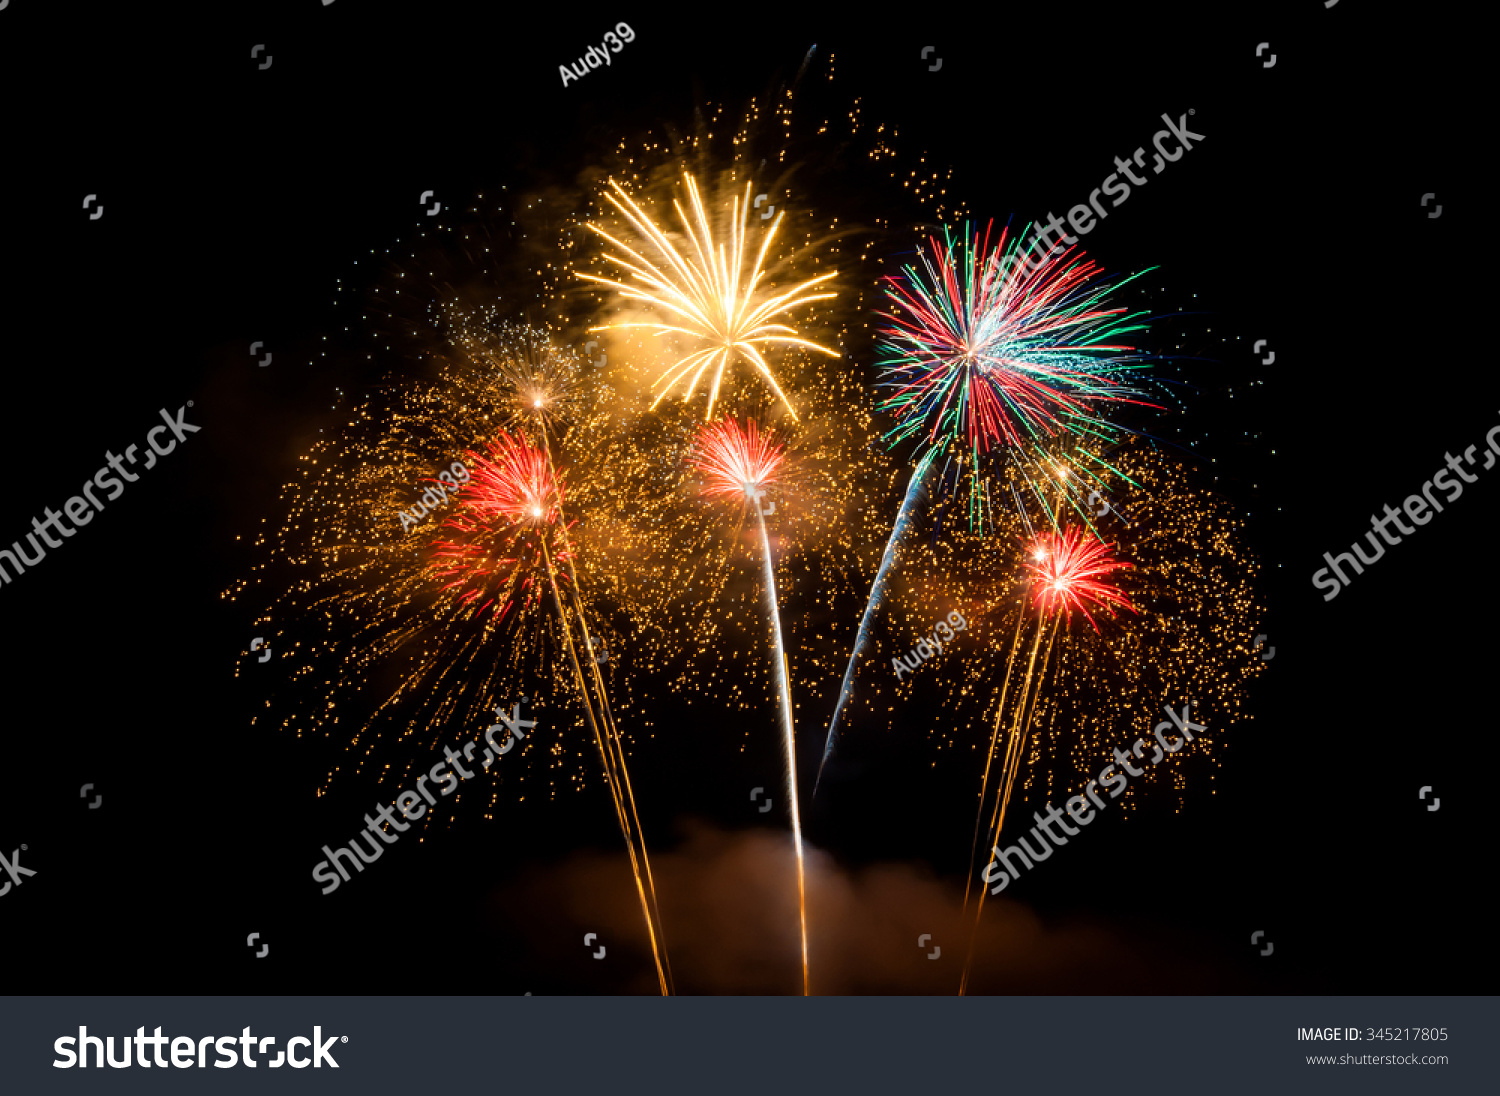 Fireworks light up the sky,New Year celebration. #345217805